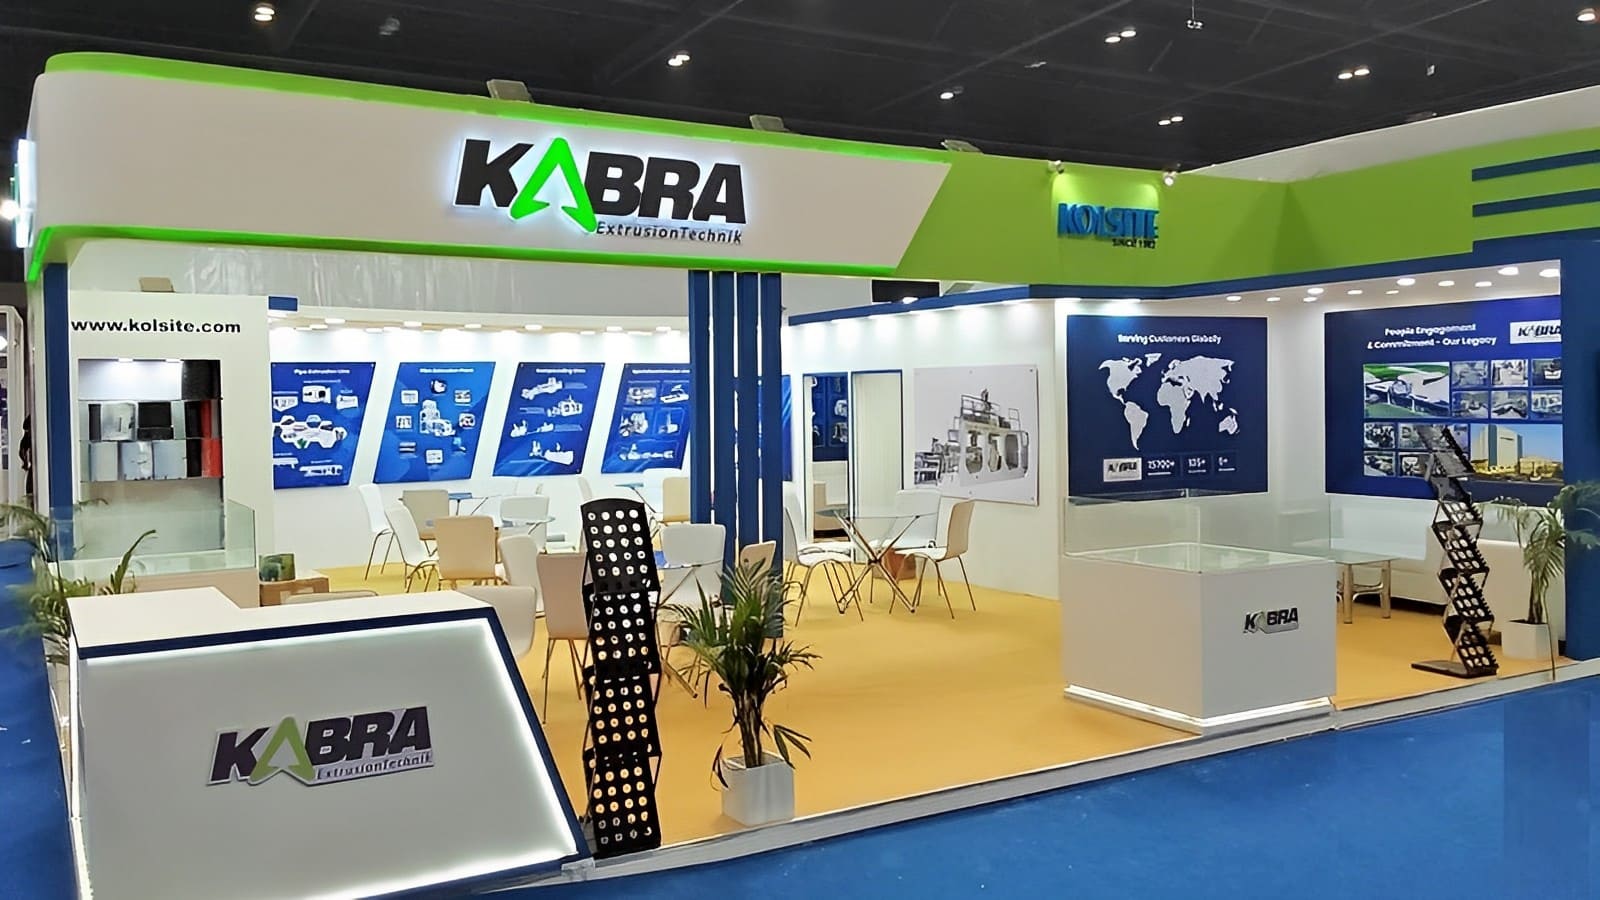 Kabra Extrusiontechnik completes acquisition of Kolsite Energy